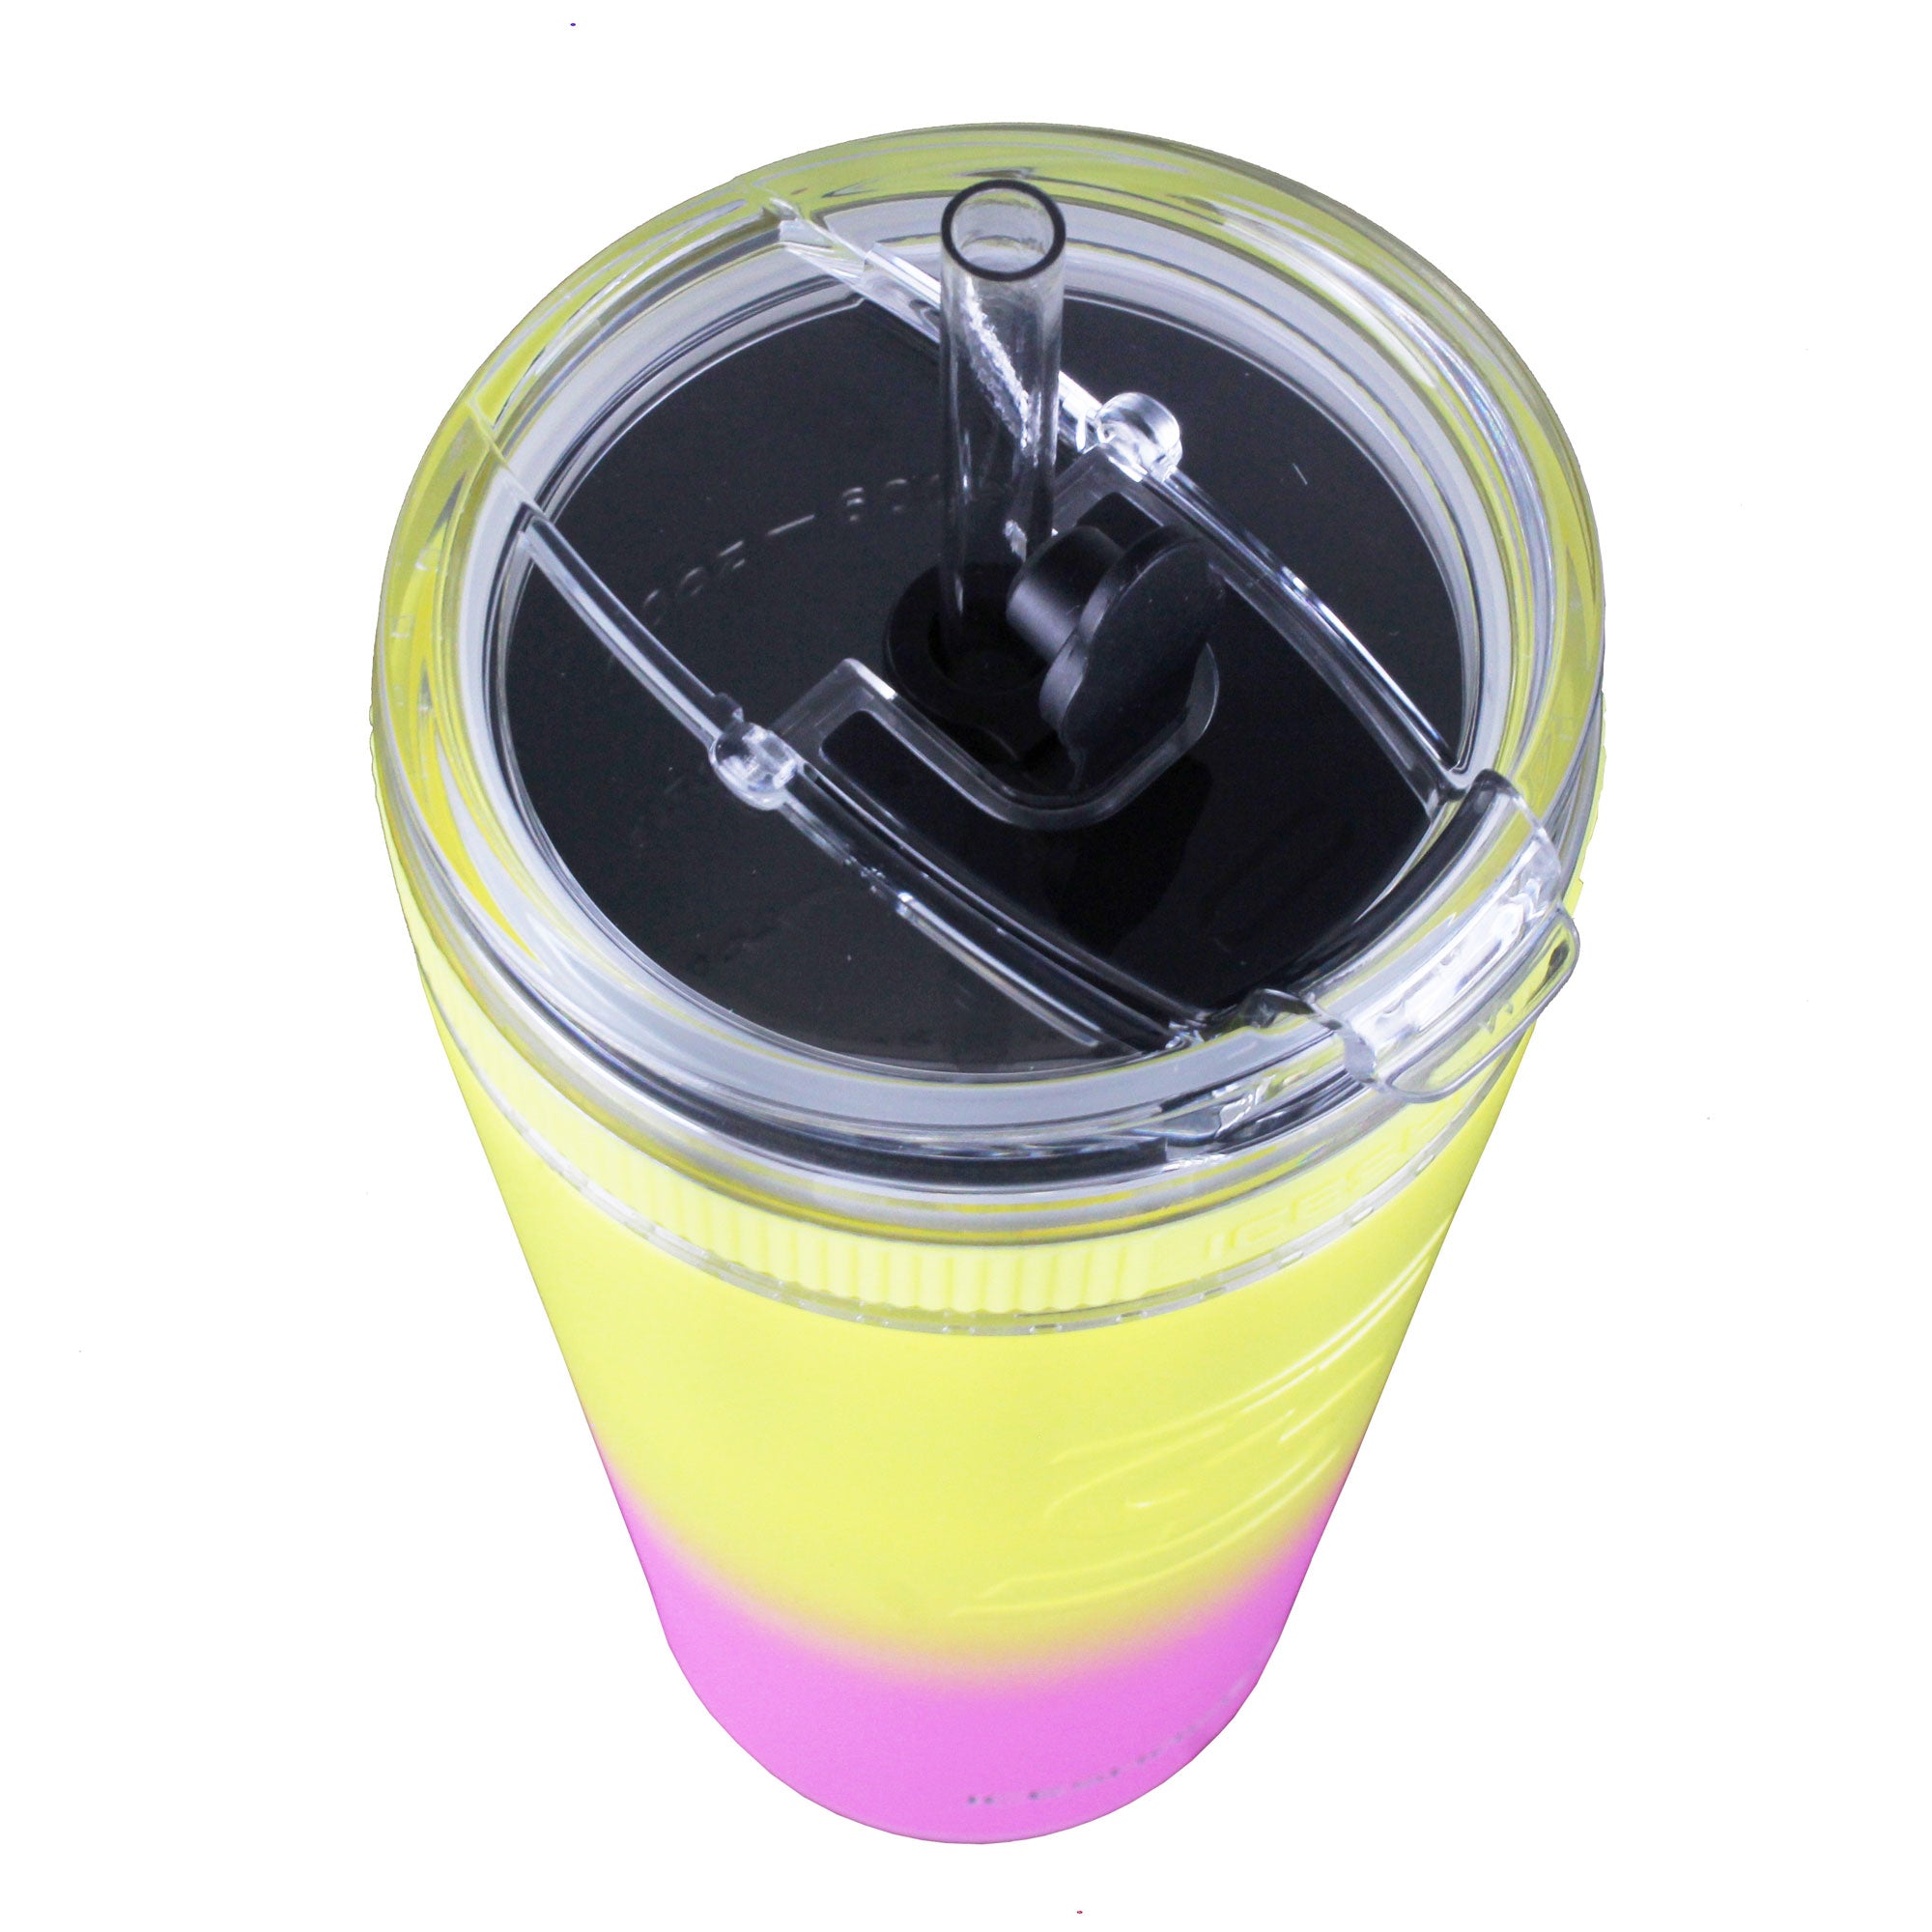 Ice Shaker™ Flex Lids - Variety of Colors